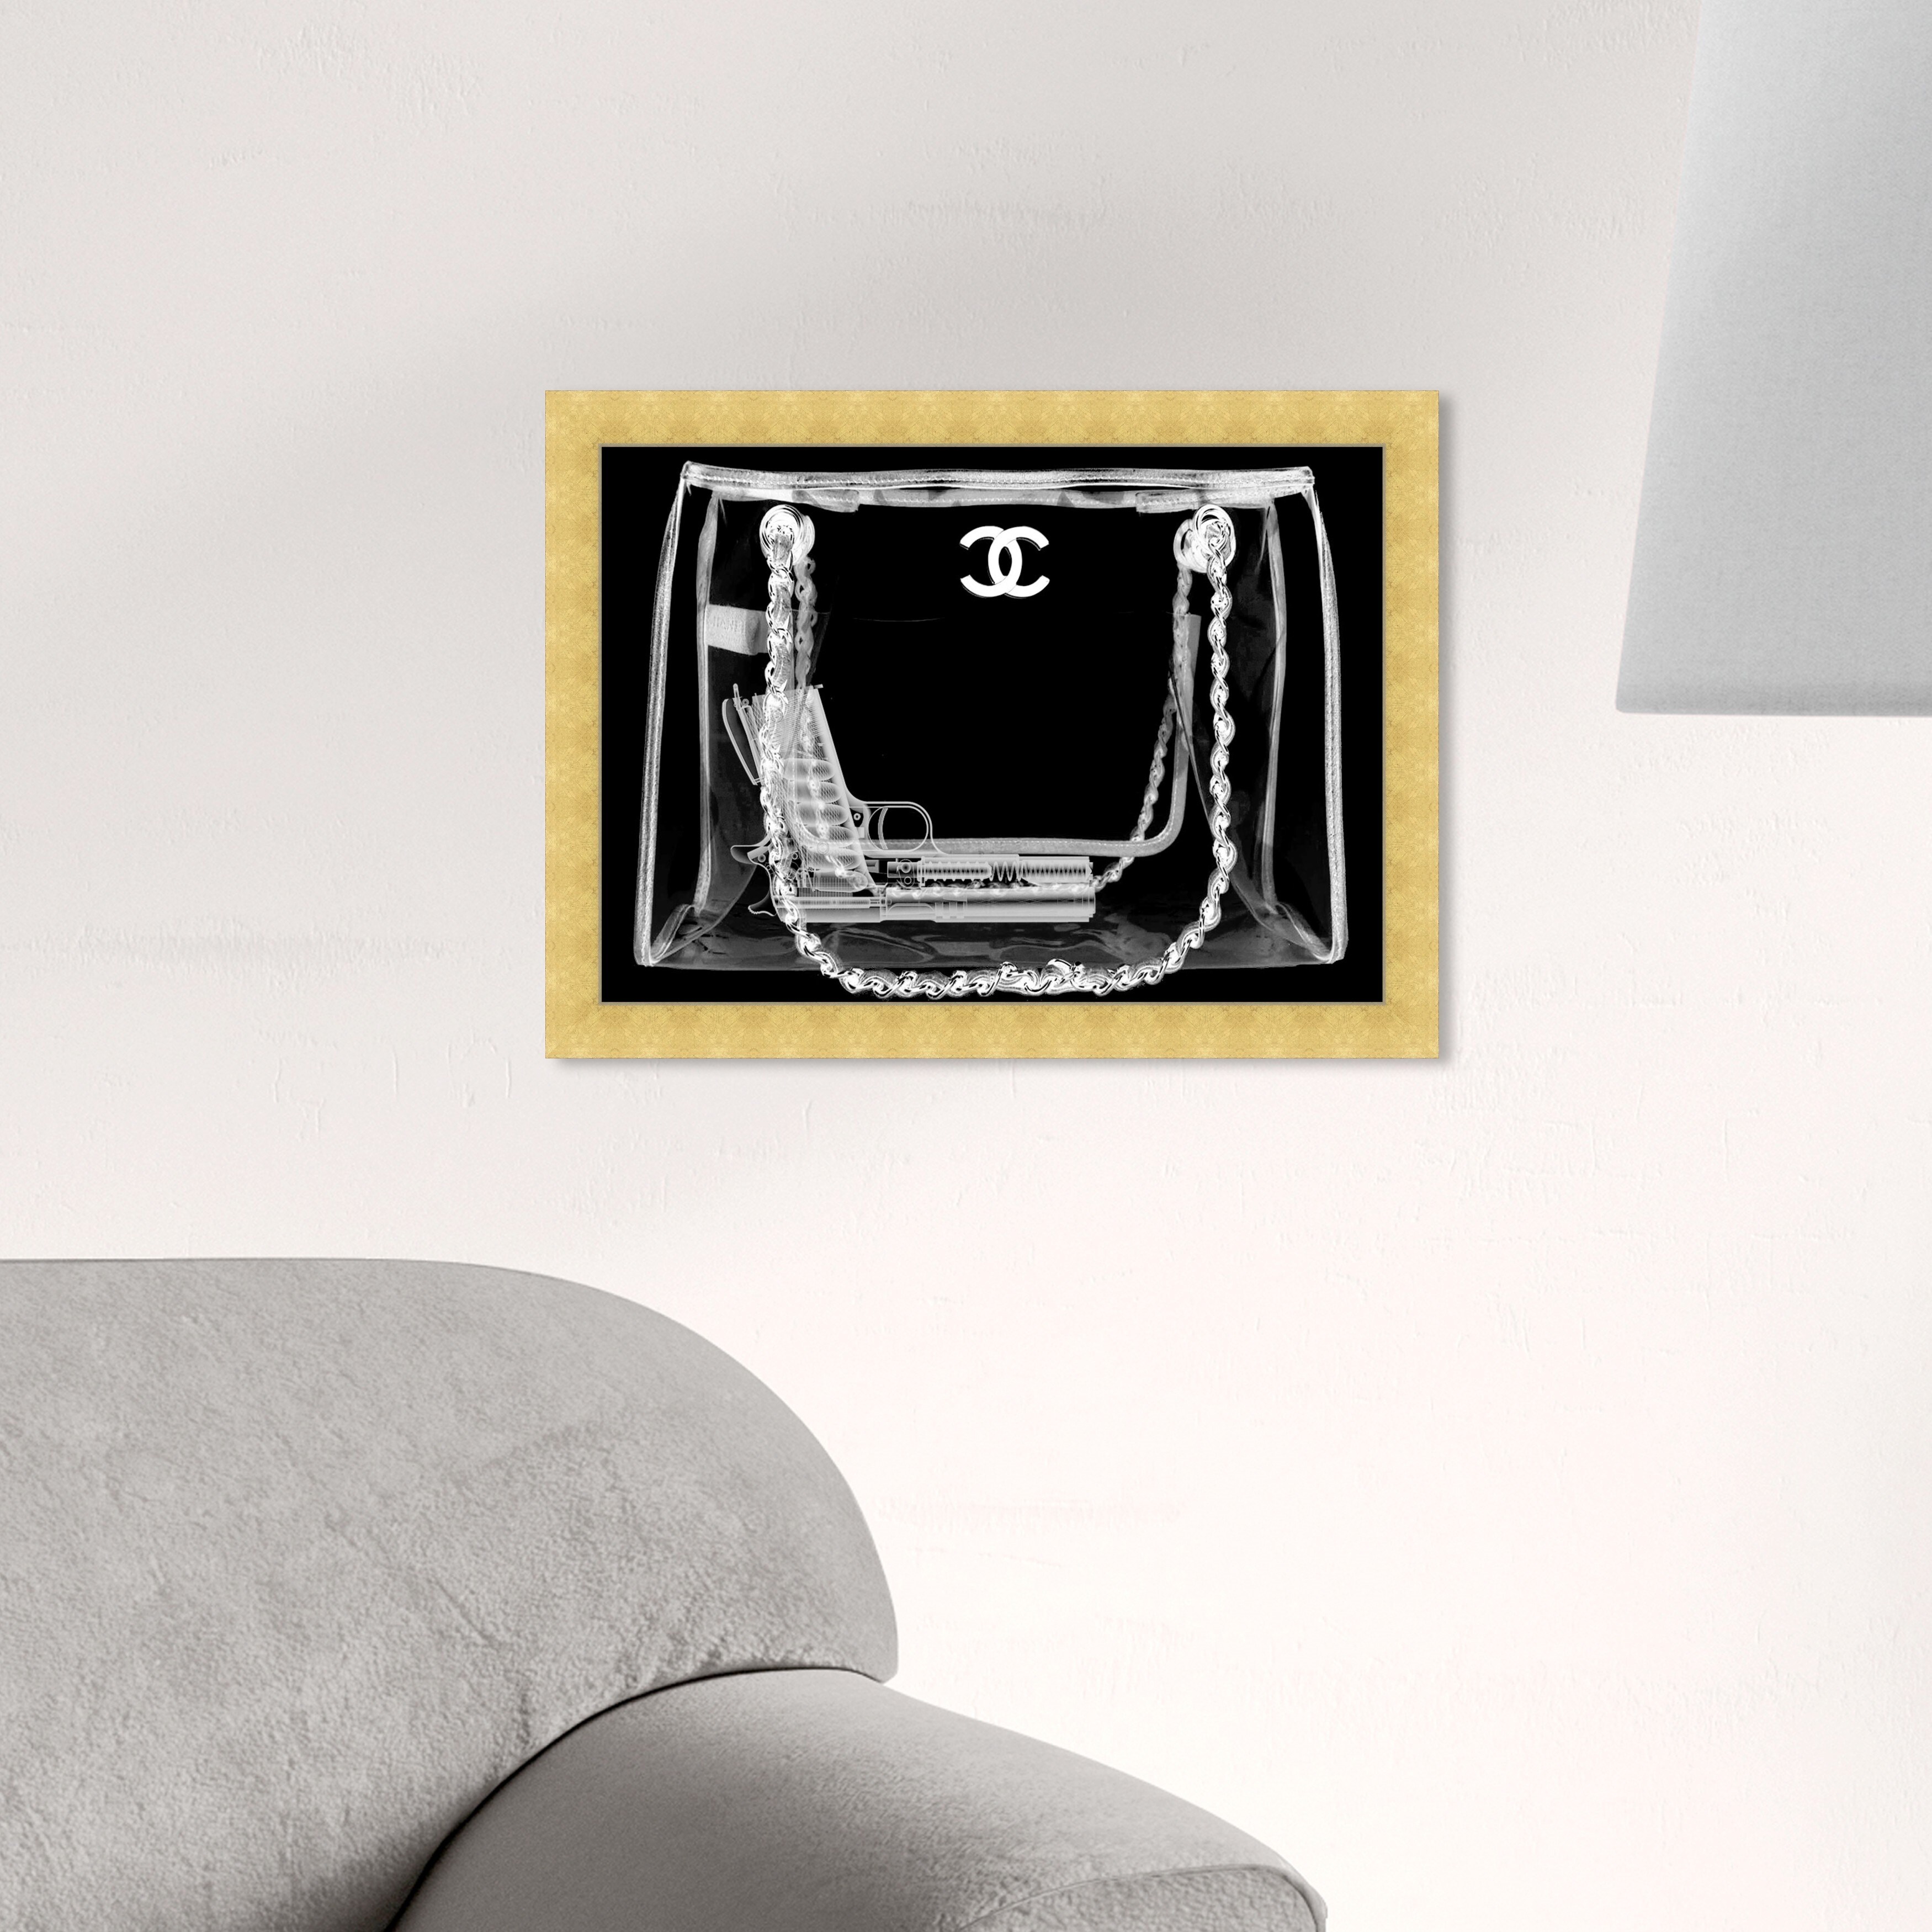 Wynwood Studio Fashion and Glam Wall Art Canvas Prints 'LV Gold' Handbags -  Gold, White